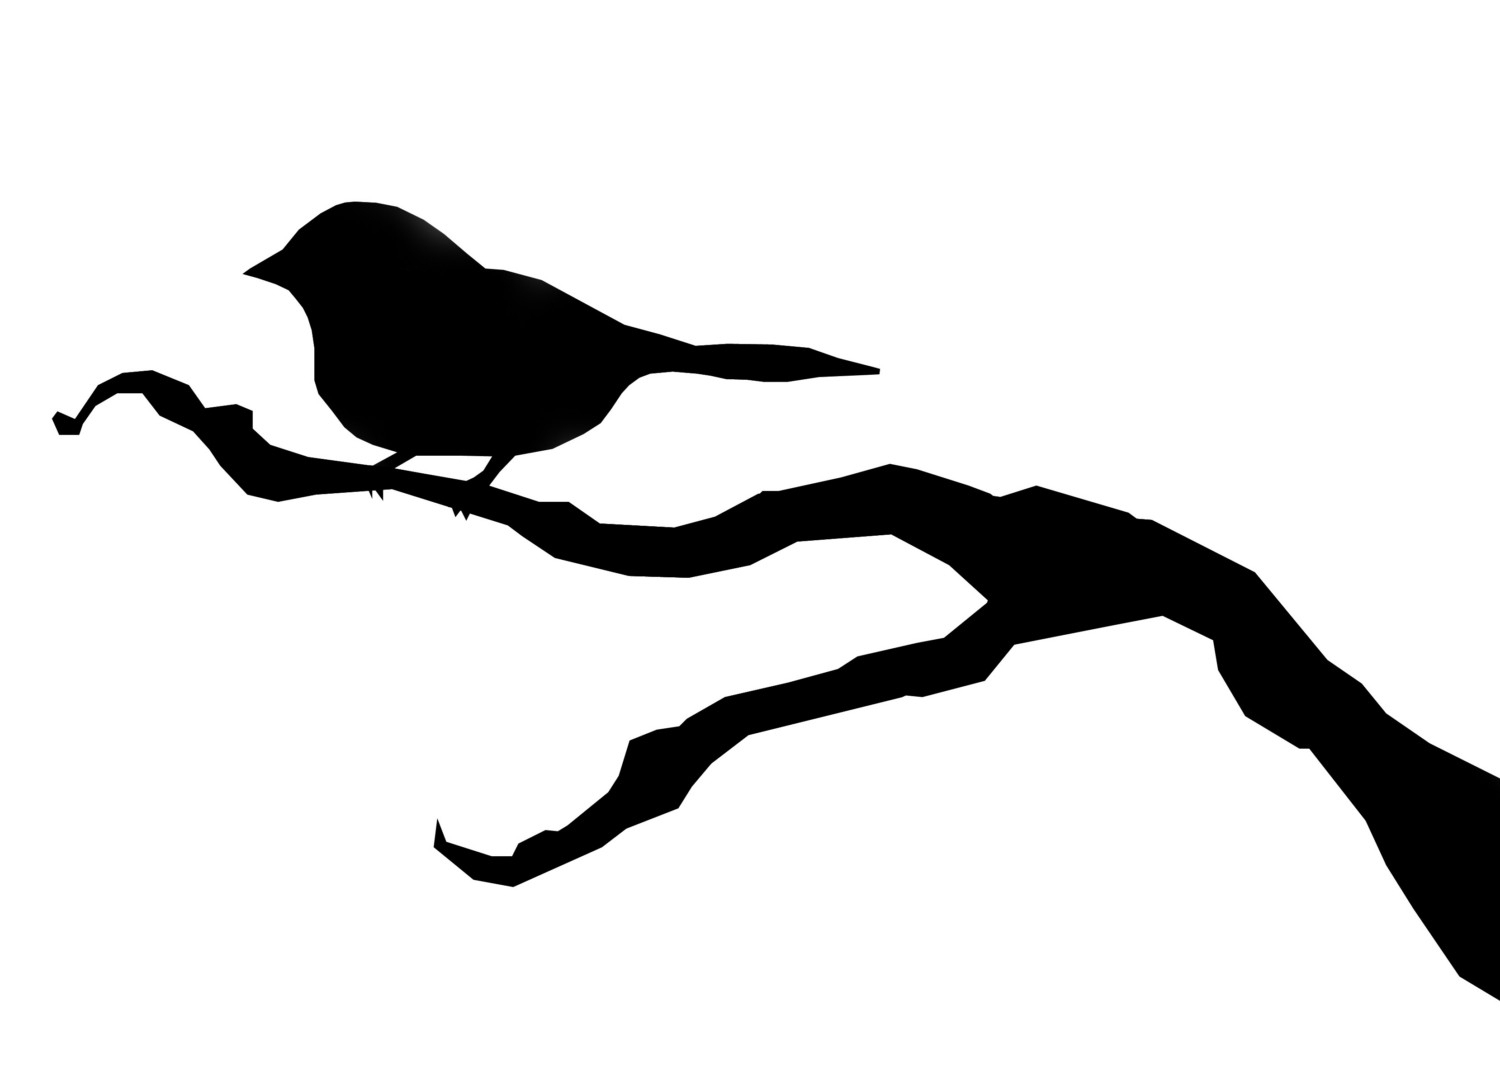 Bird Silhouette Wallpaper - Wallpapersafari serapportantà Silouhette Oiseau Adecouper 